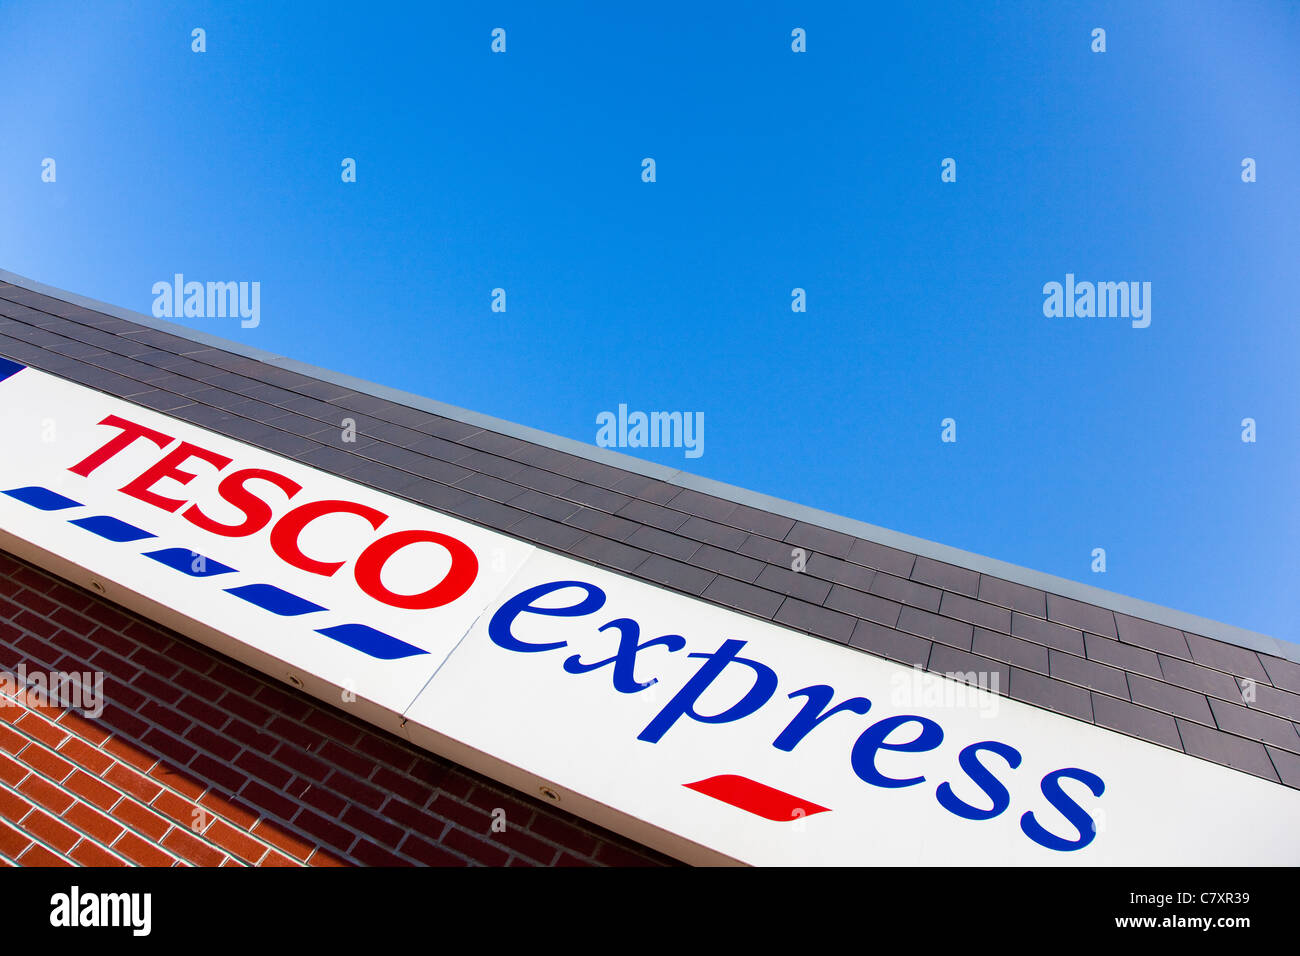 Sign, Tesco Express supermarket, London, UK Stock Photo